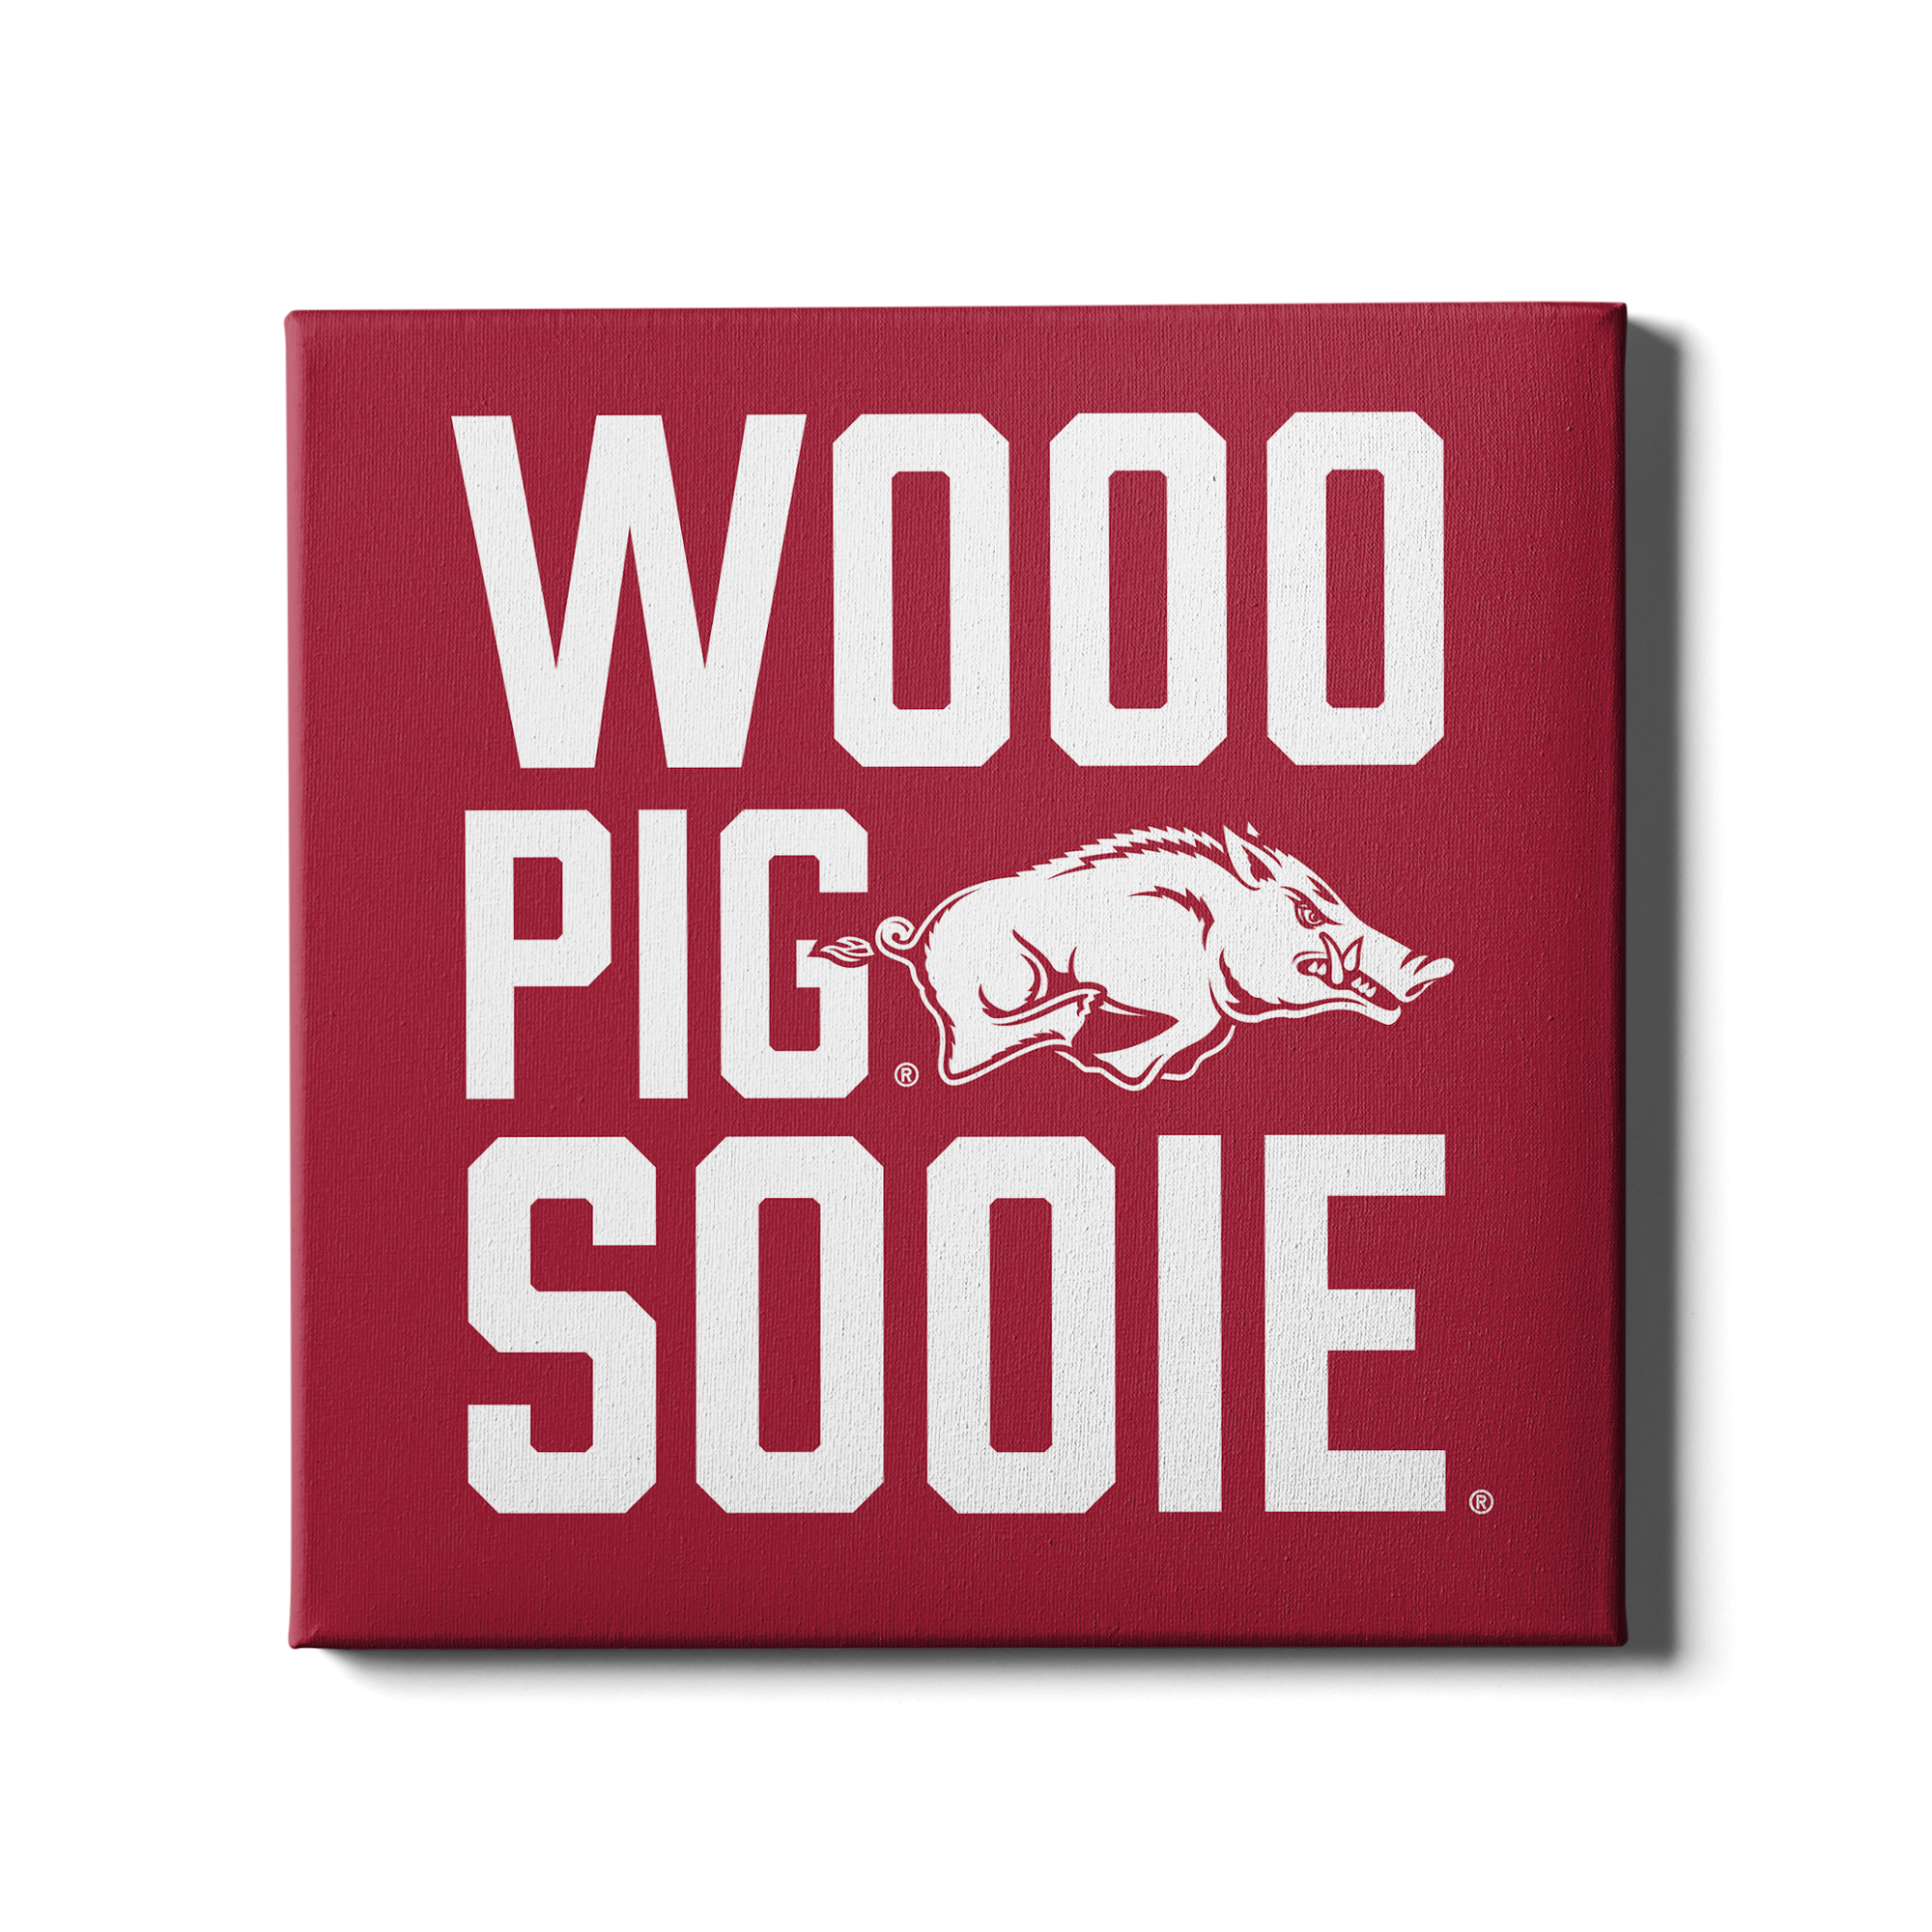 Arkansas Razorbacks - Wooo Pig Sooie - College Wall Art #Canvas